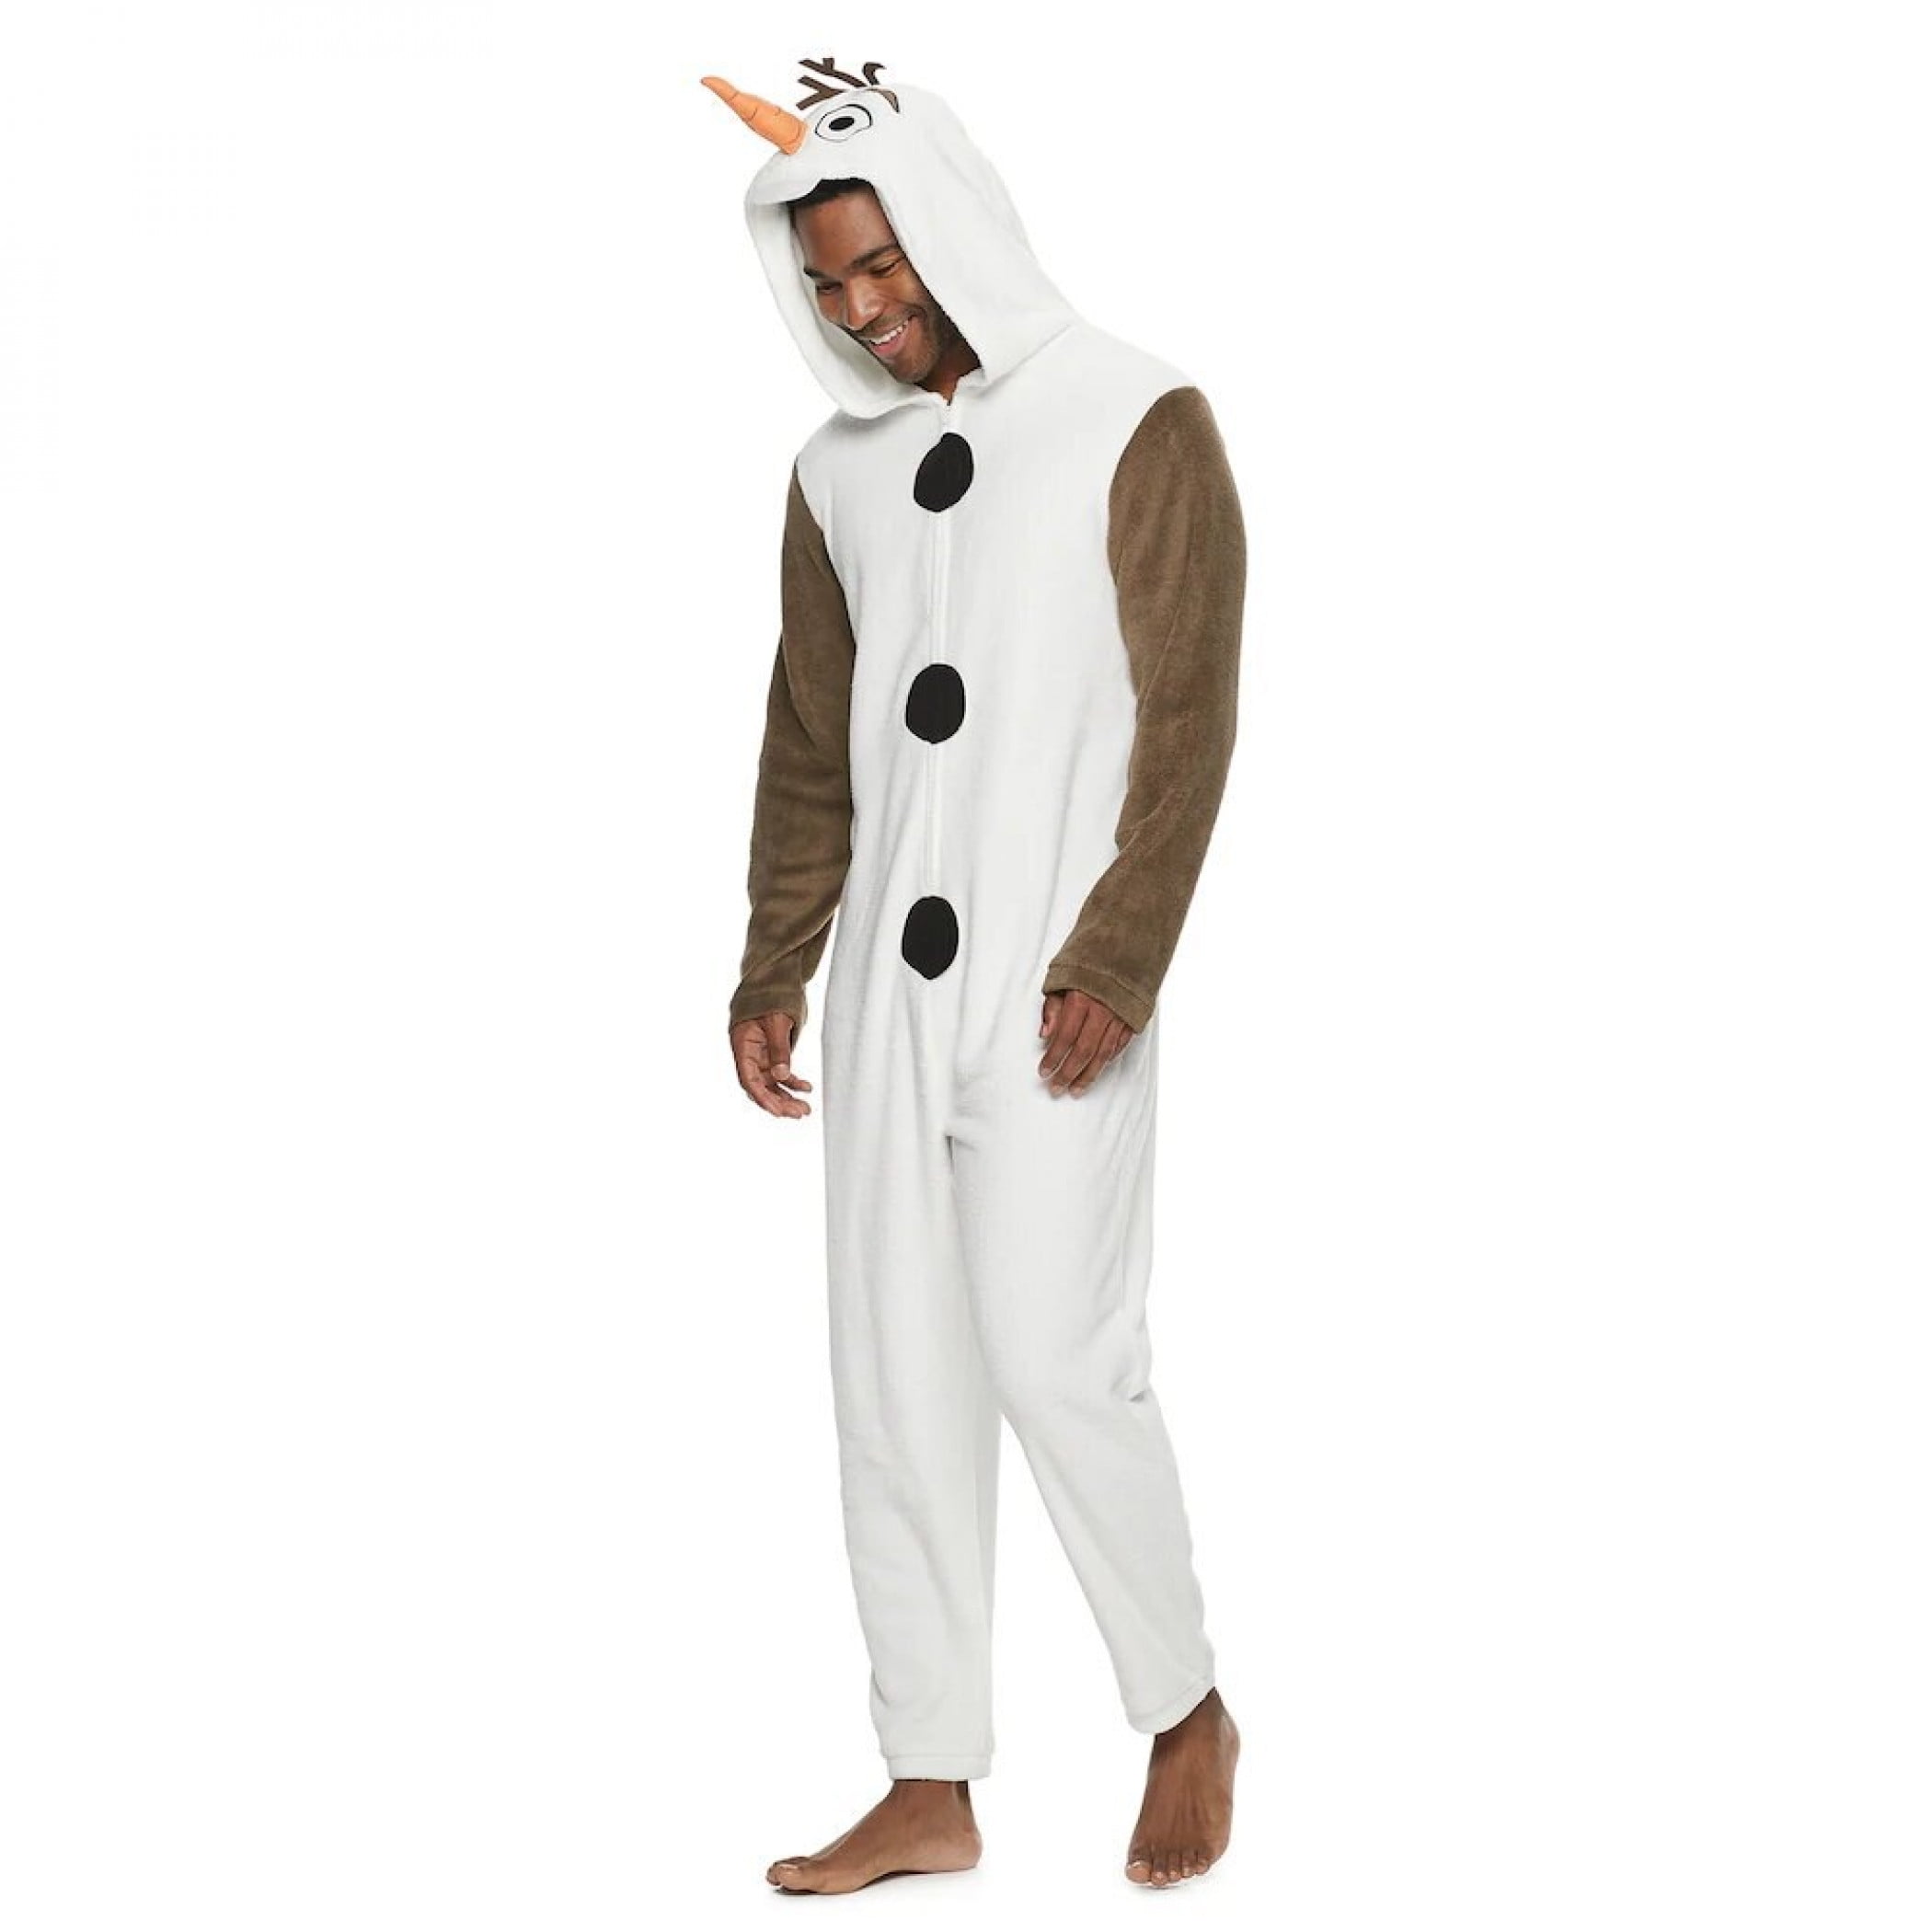 speling Lil Voorzichtig Frozen's Olaf Costume White Plush Union Suit-Small - Walmart.com